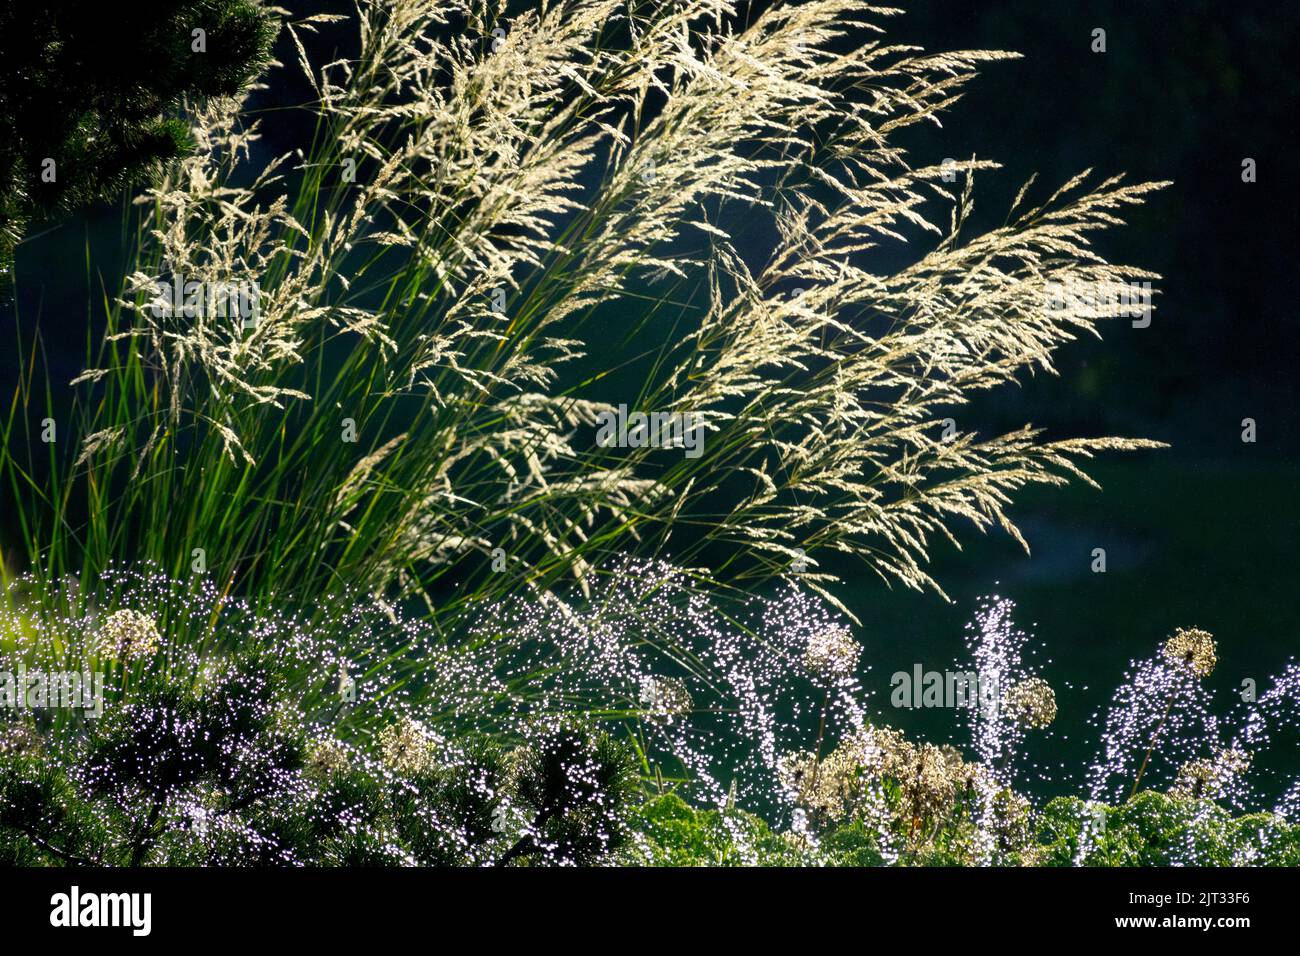 Watering garden, Chee Grass, Achnatherum splendens or Stipa splendens, Tall Grass Blooming in mid-summer garden long grass Stock Photo